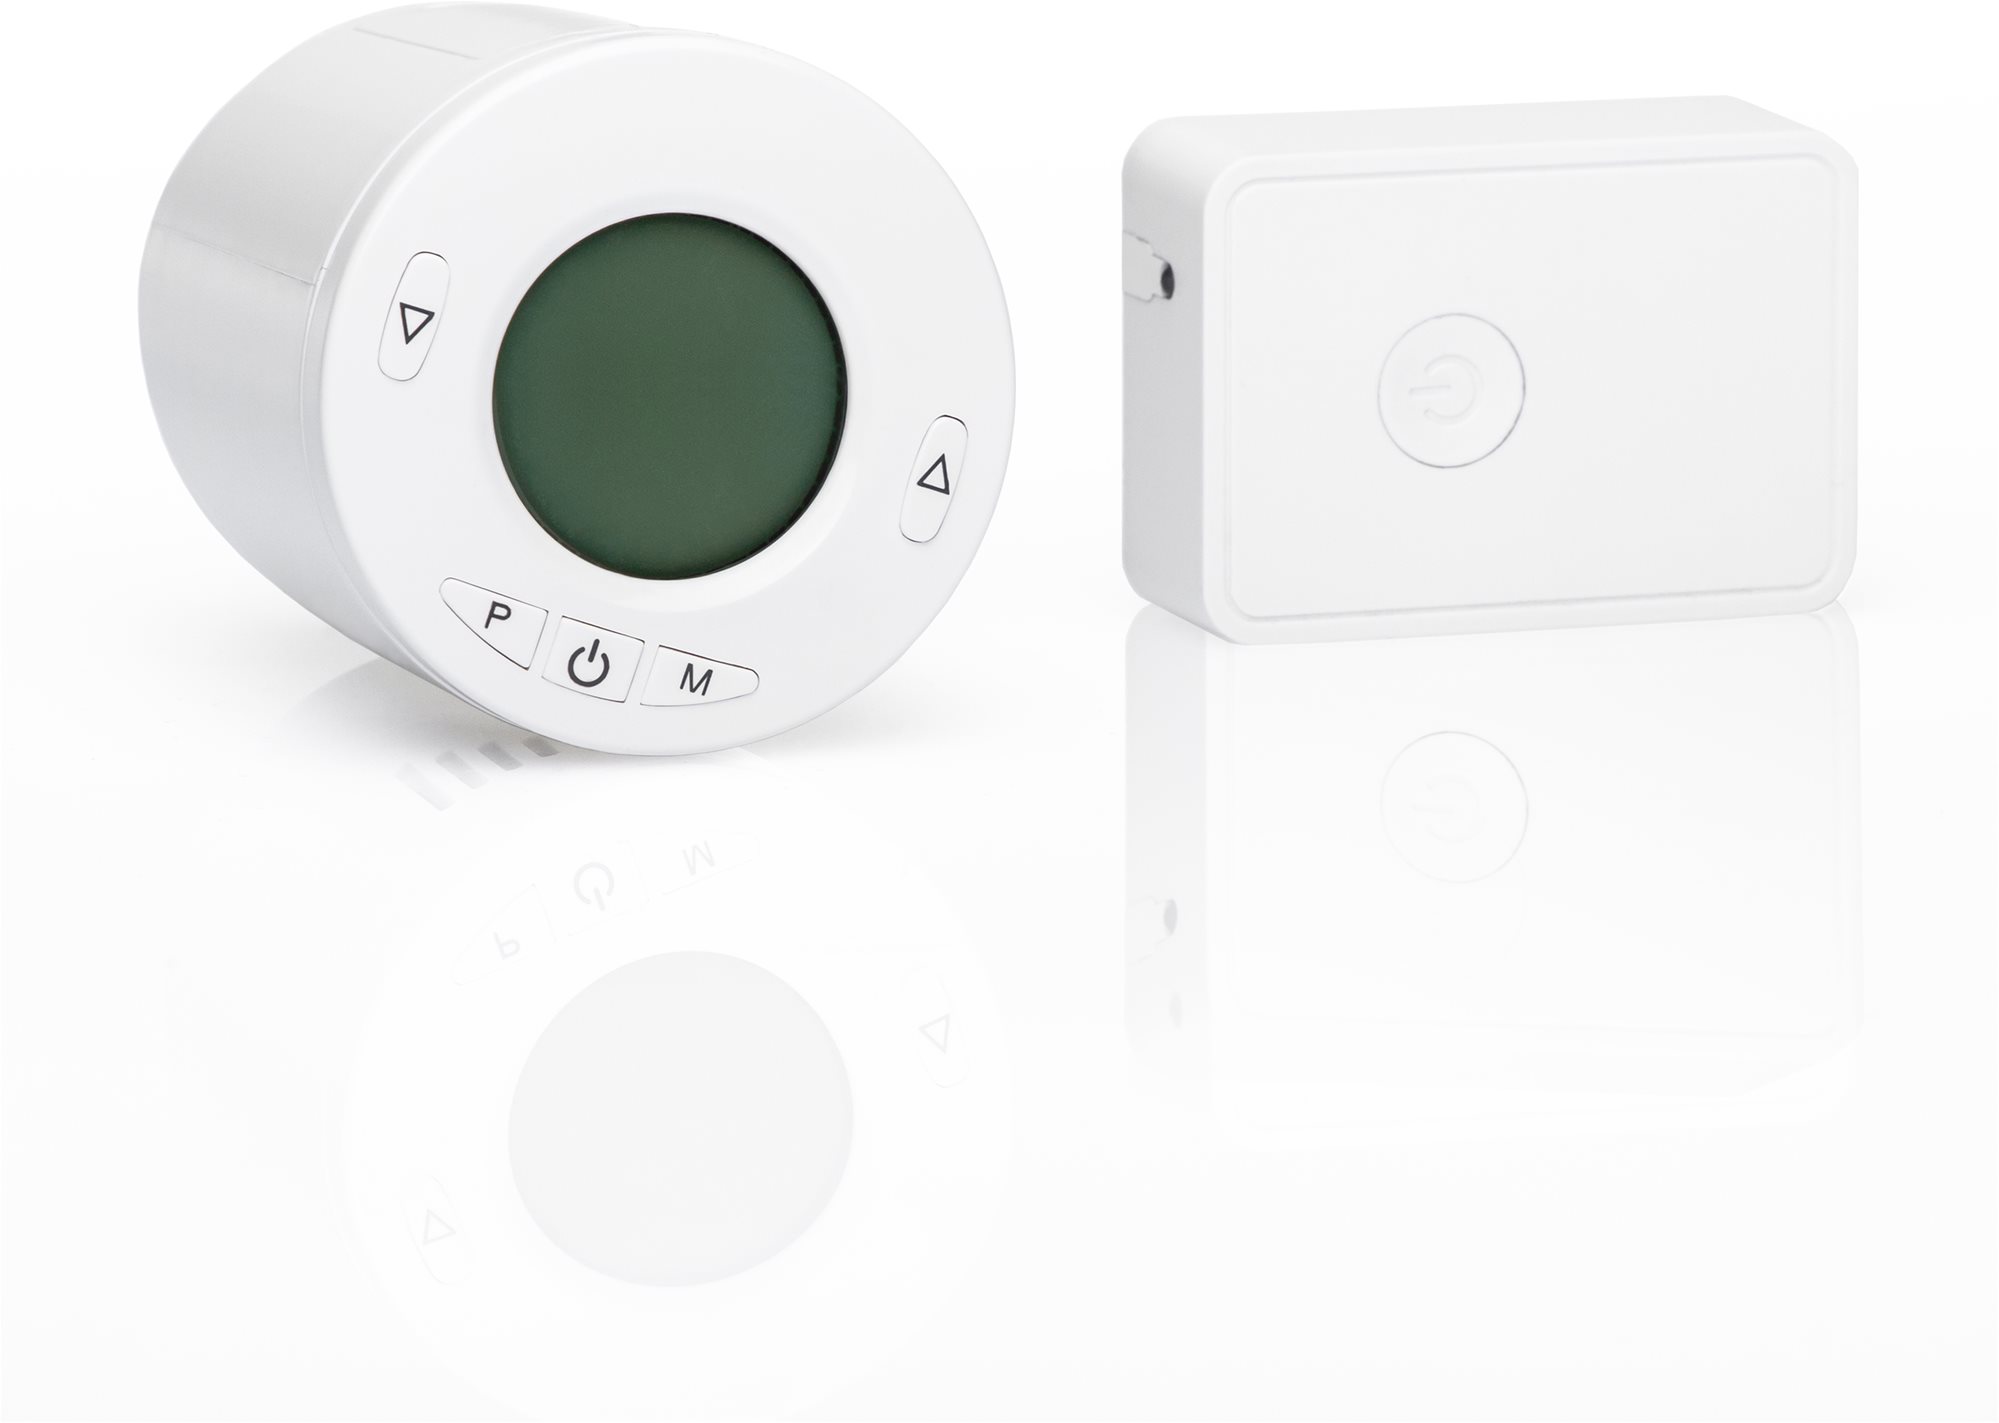 Meross Smart Thermostat Valve Starter Kit